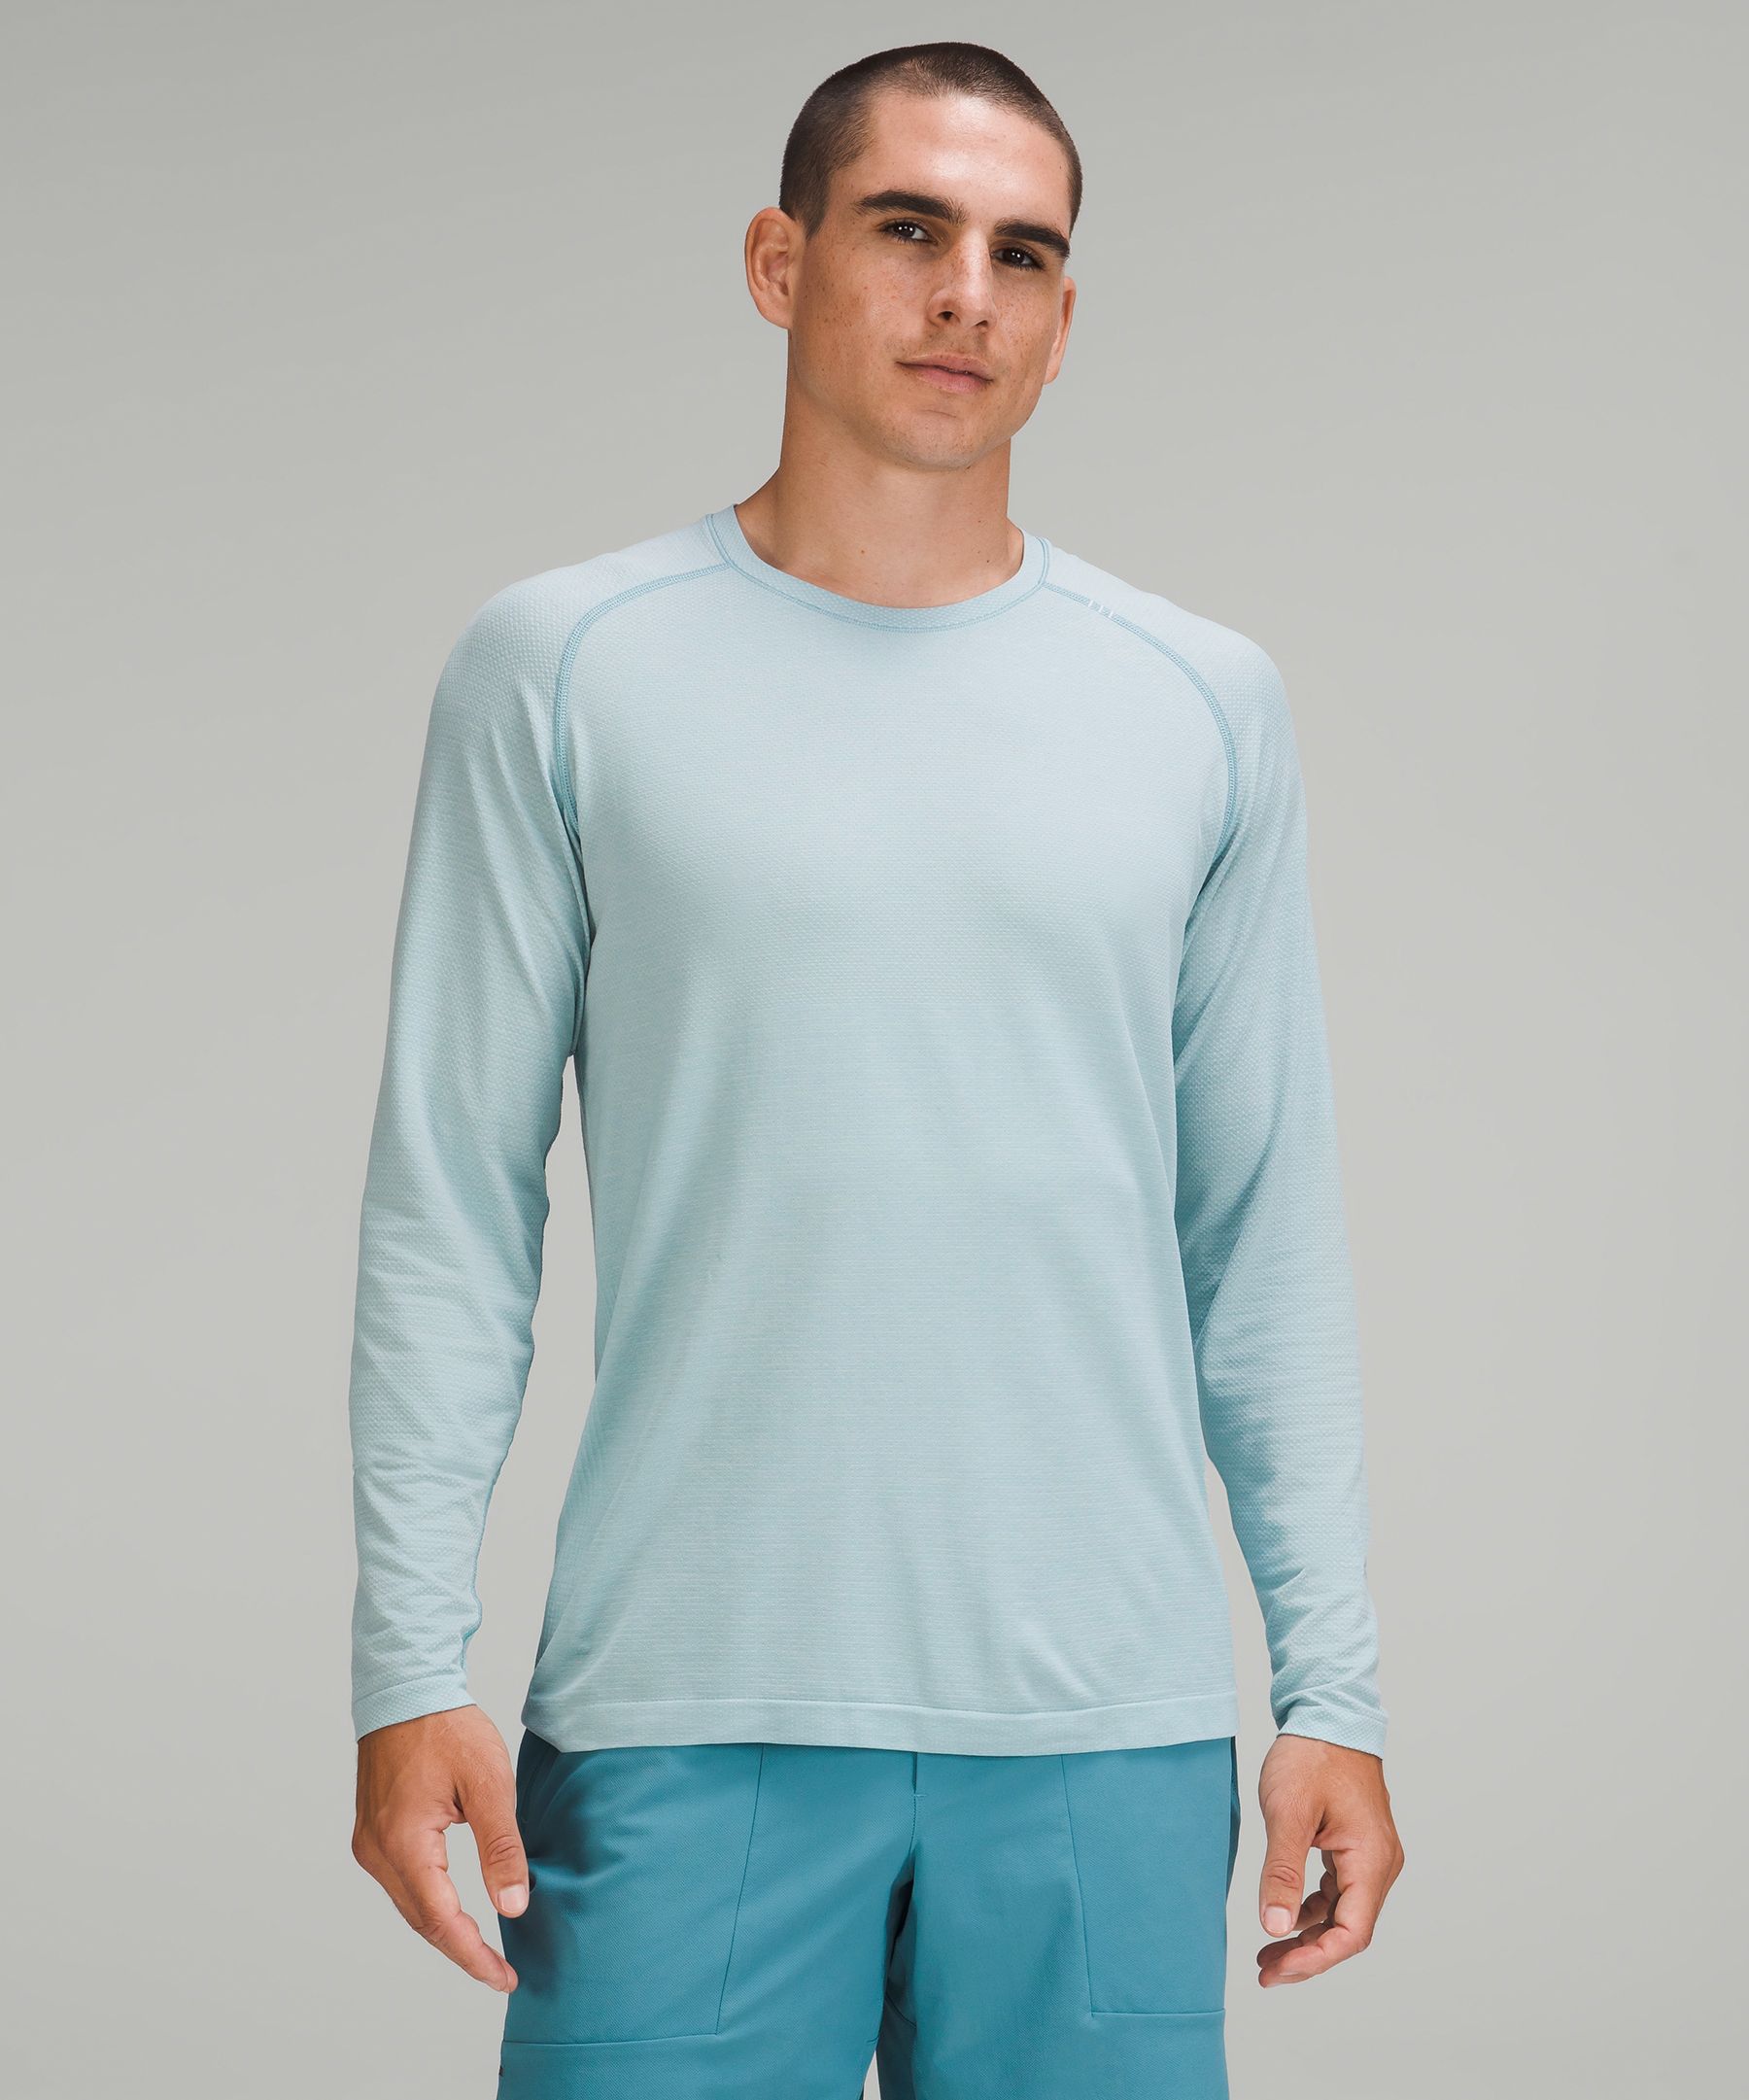 Lululemon Metal Vent Tech Long Sleeve Shirt 2.0 In Peroxide/breeze Blue